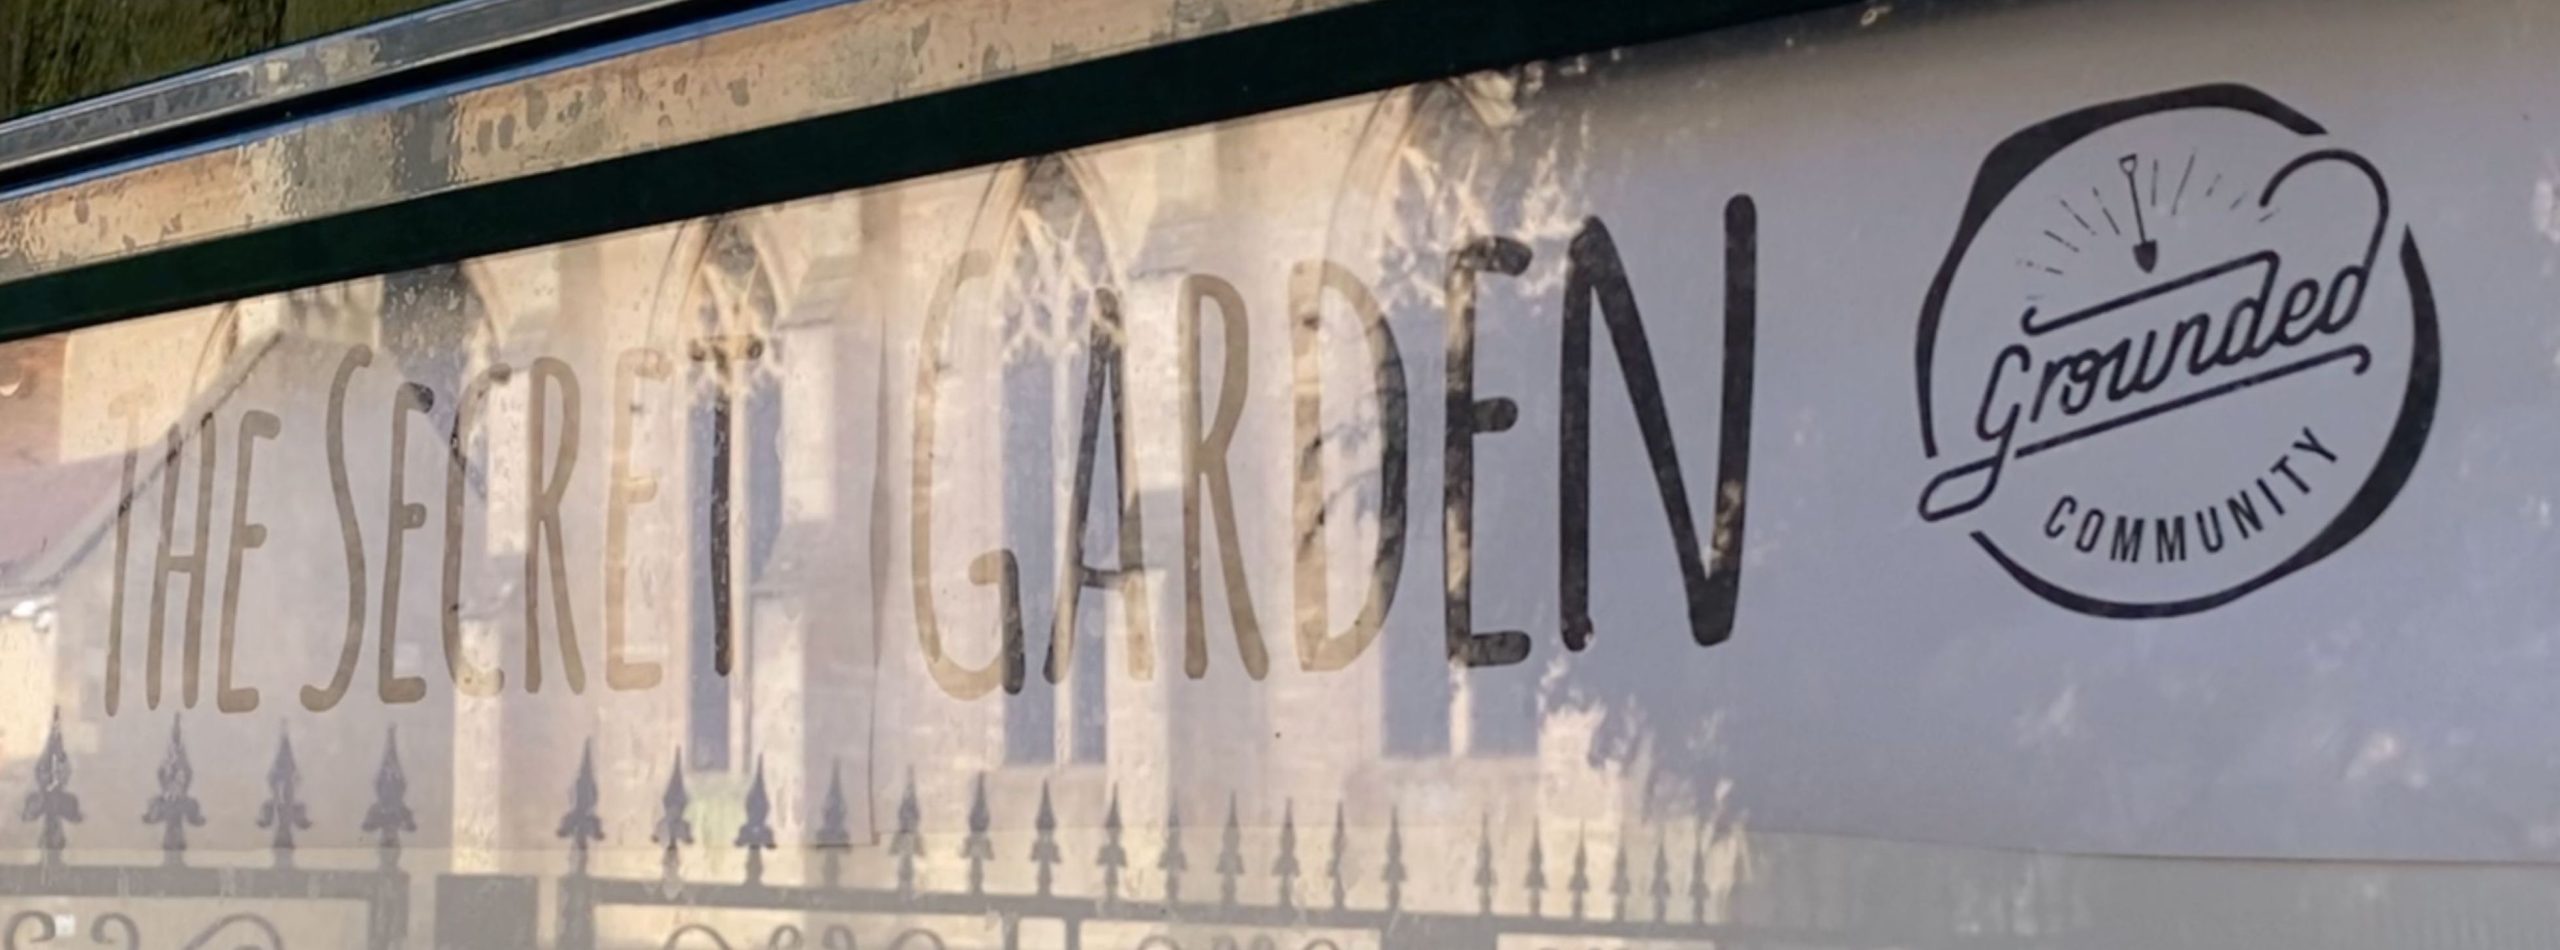 The Secret Garden Sign 